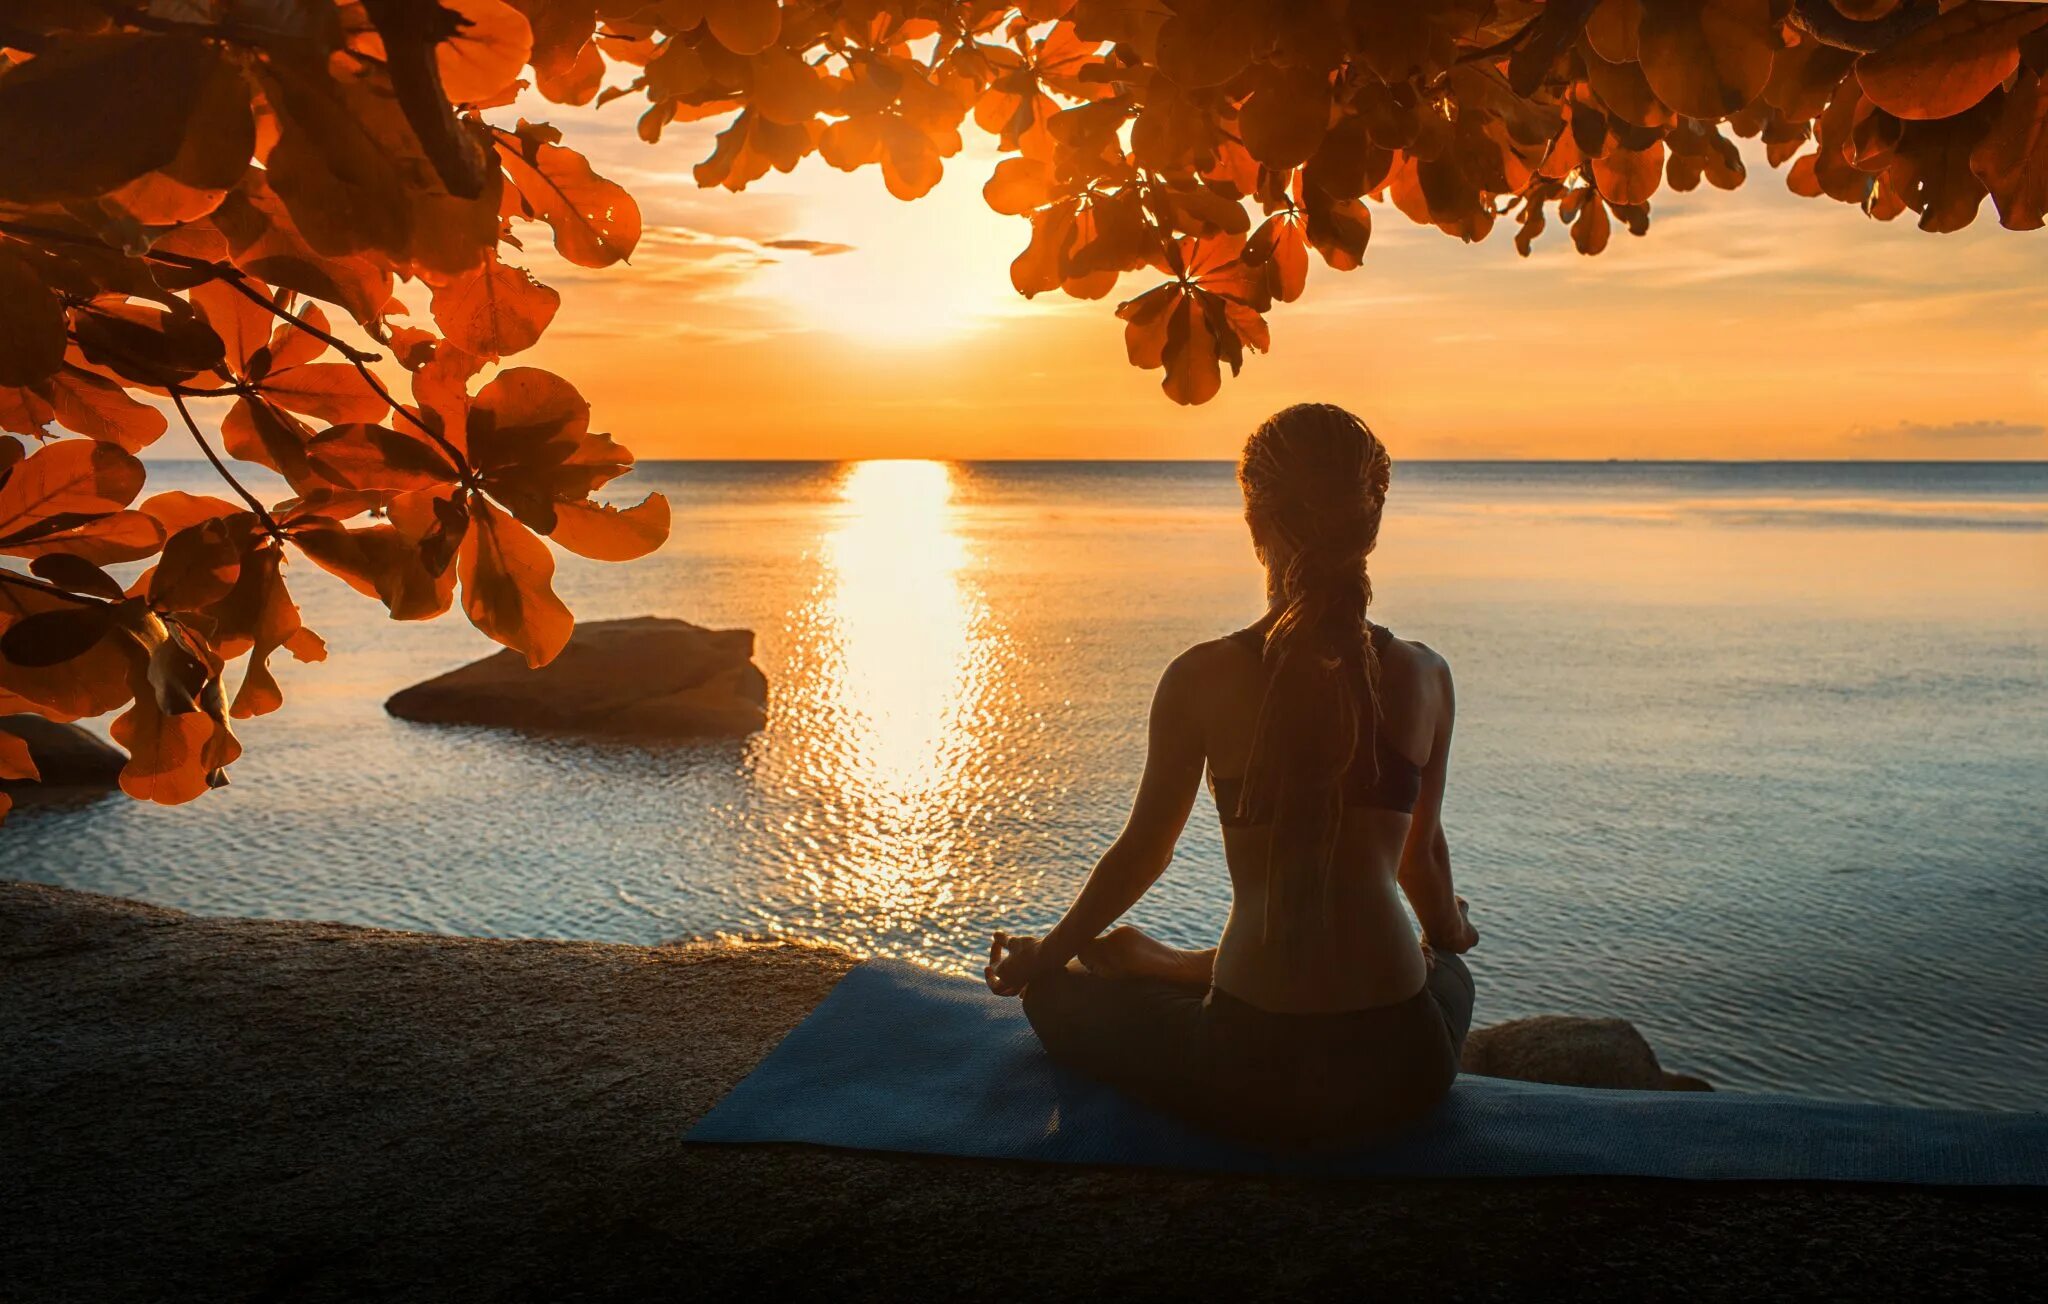 Девушка в позе лотоса на закате. Медитация на море. Медитация на закате. Медитация на берегу моря. Окружающее спокойно